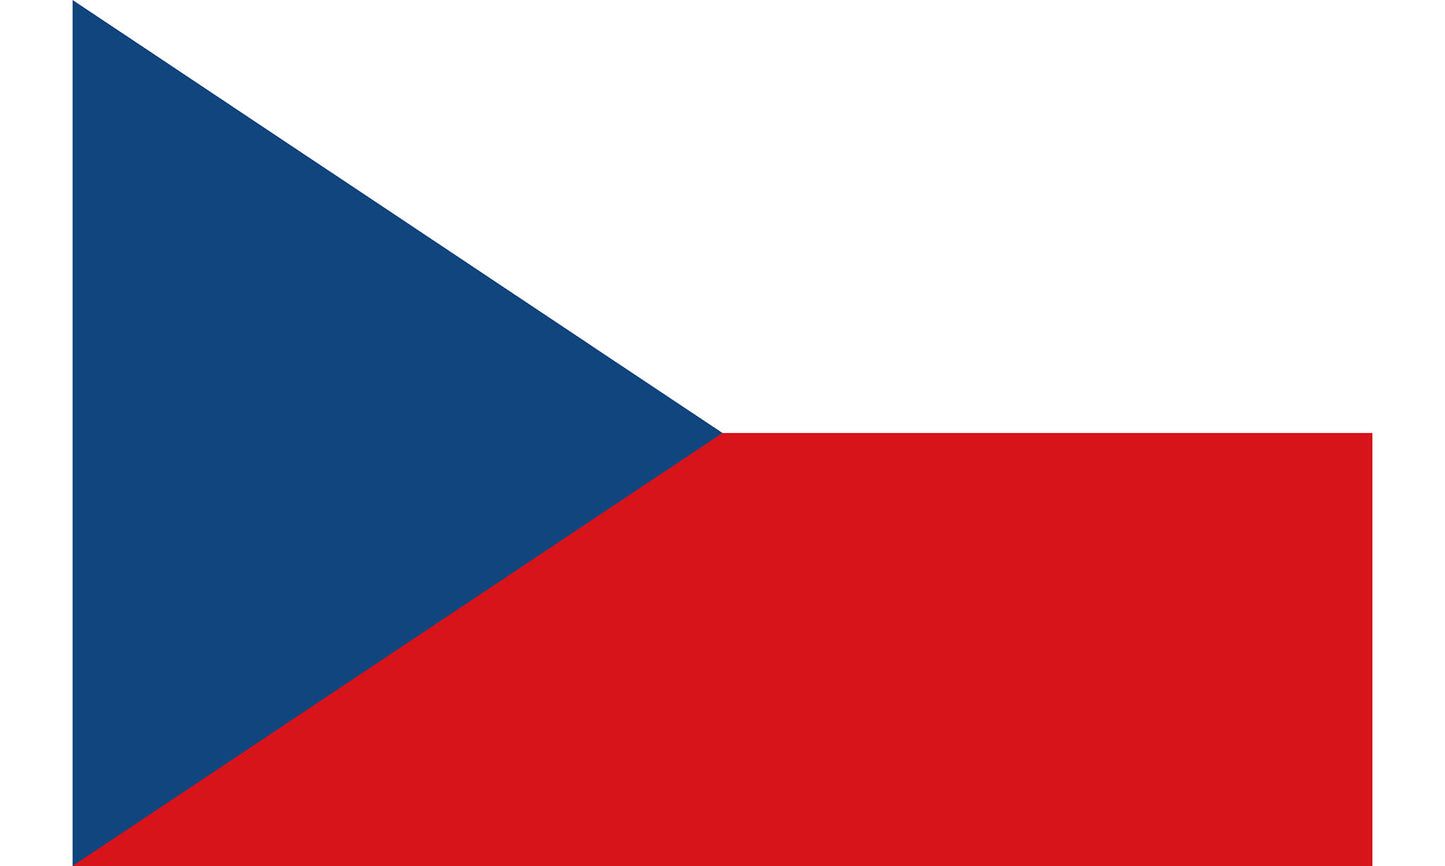 UF-CZE-150x90 - государственный флаг Чехии. Материал флага: полиэстер с бронзовыми кольцами, размер: 90 см х 150 см